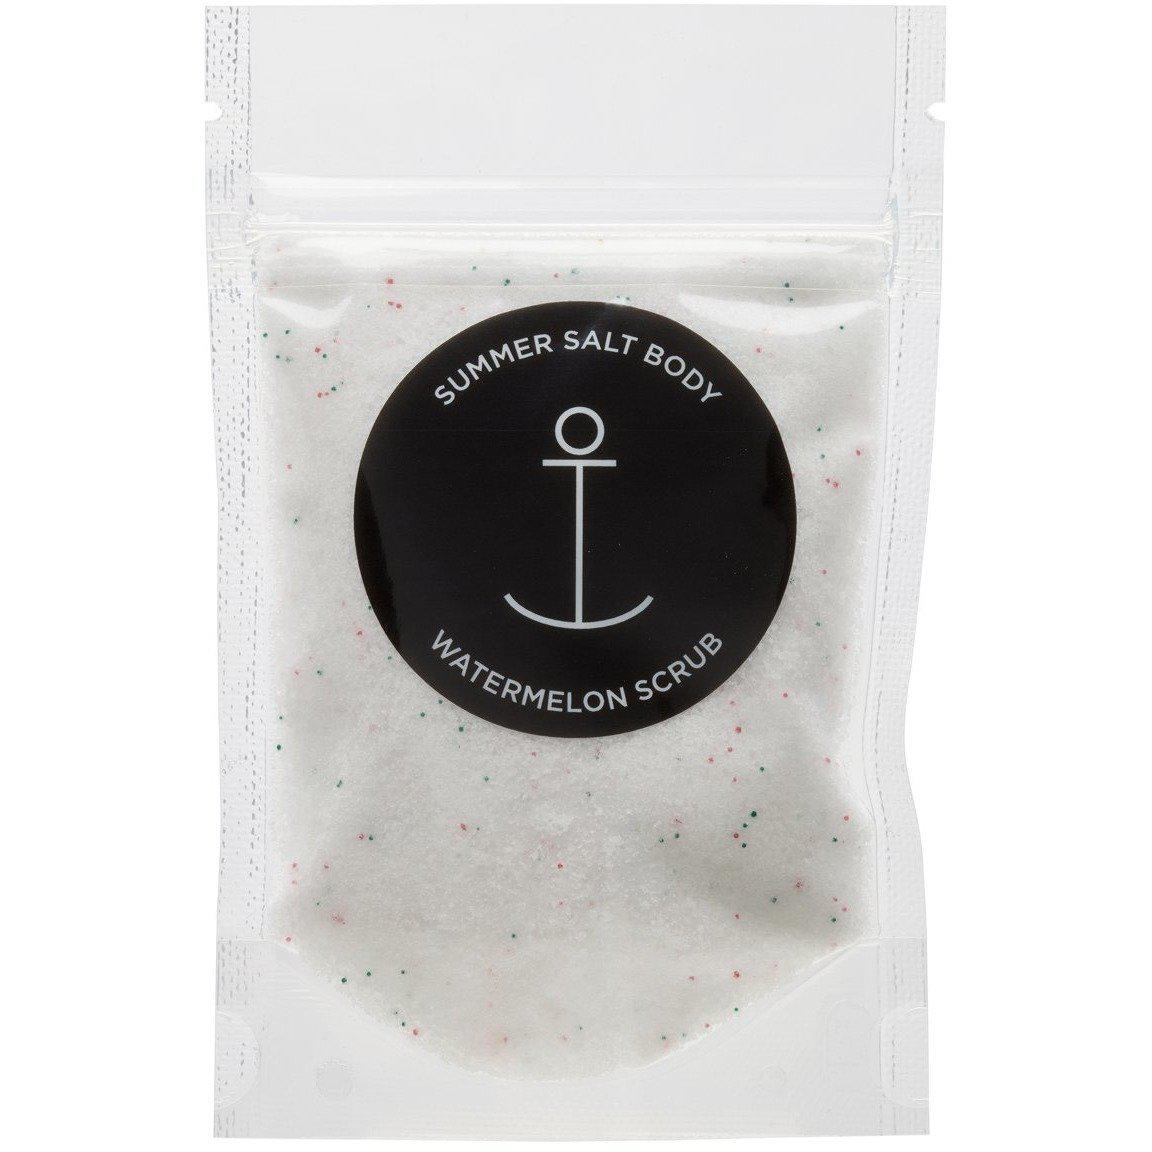 Mini Salt Scrub - 40g-Beauty & Well-Being-Summer Salt Body-Watermelon-The Bay Room